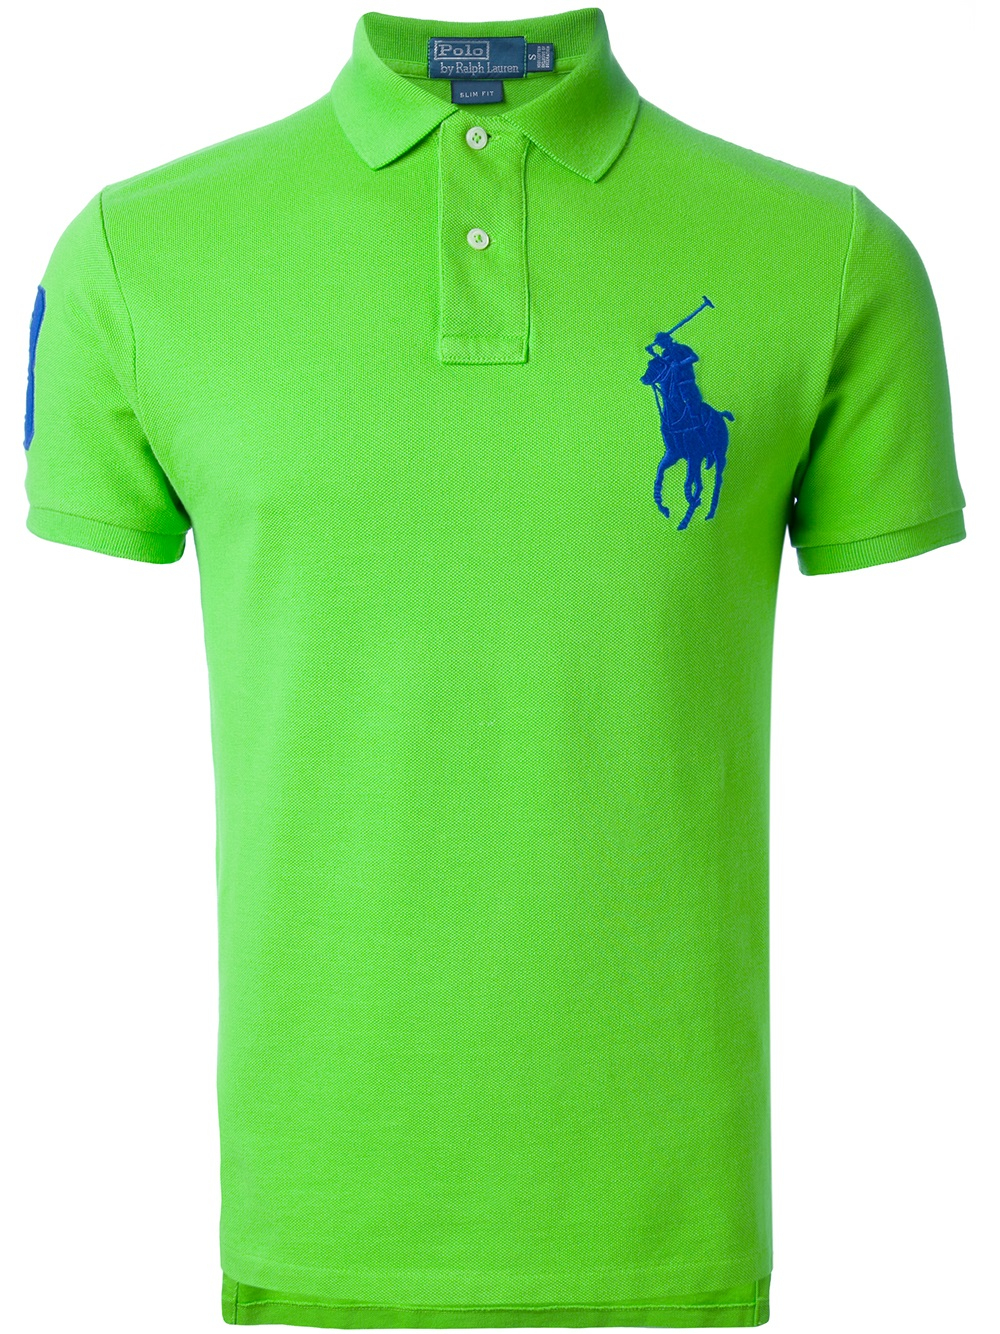 Lyst Polo Ralph Lauren Classic Polo Shirt in Green for Men